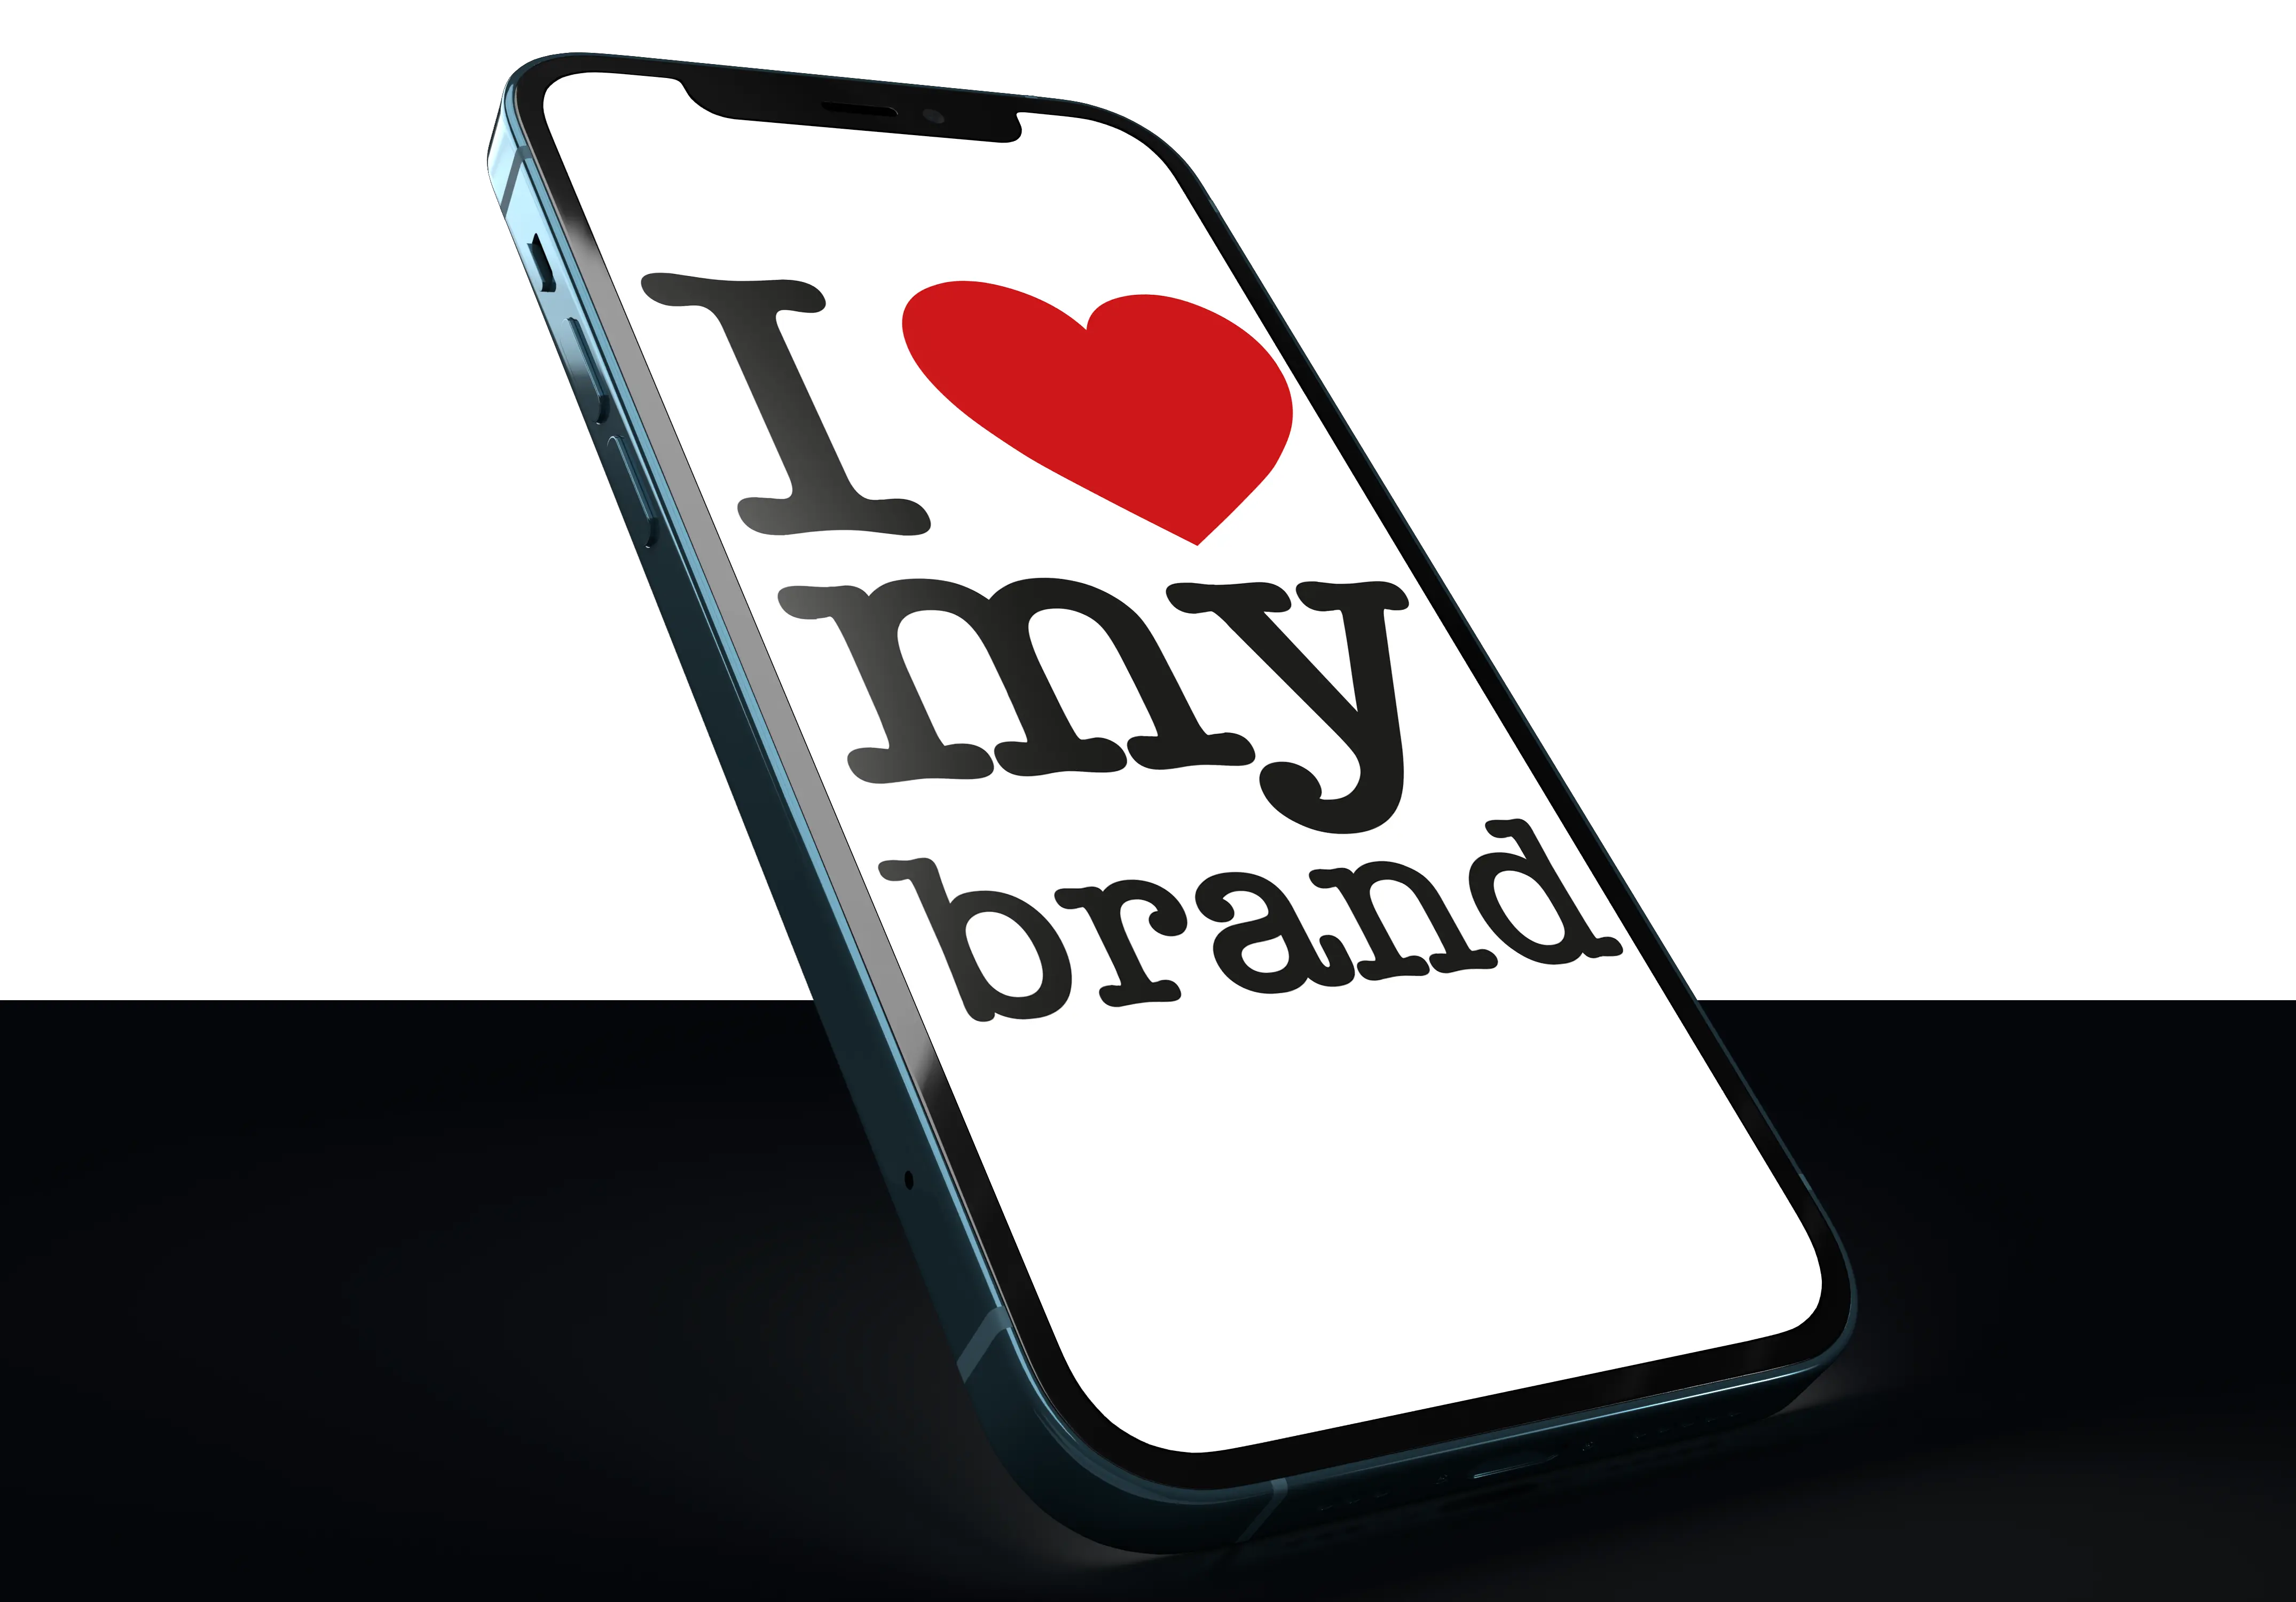 Phone with I love my brand